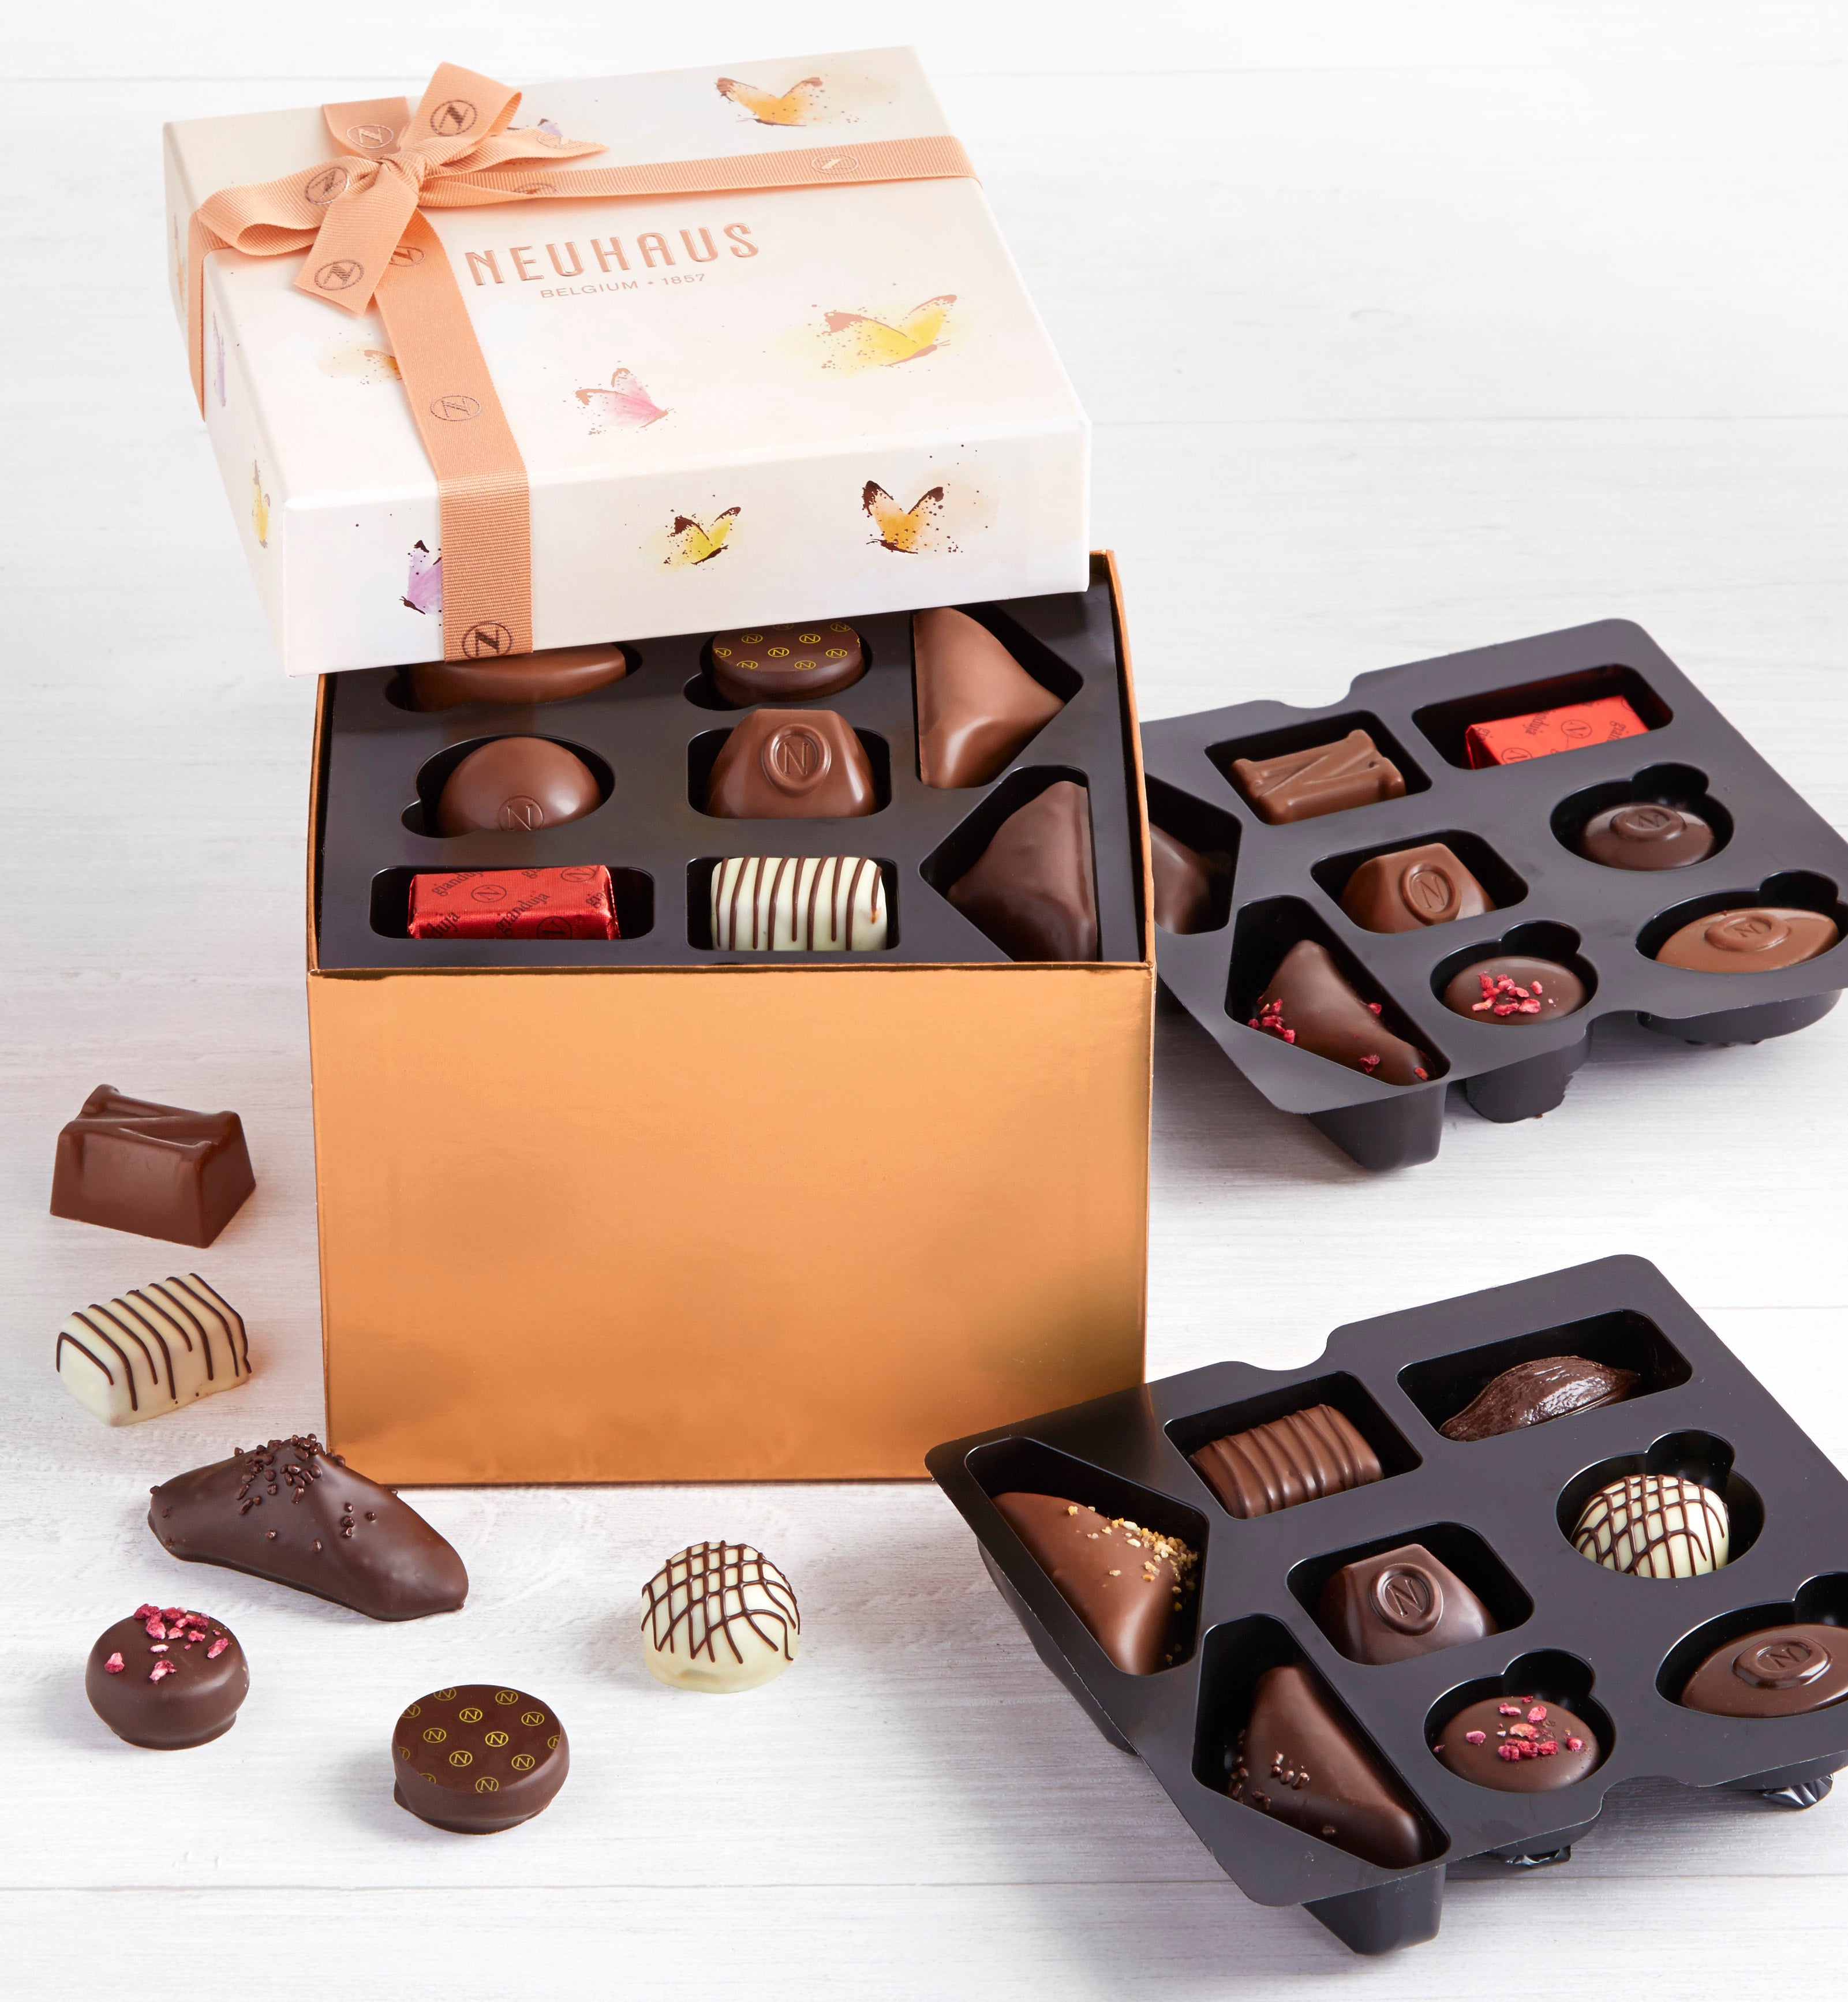 Neuhaus Chocolates Spring Gift Box